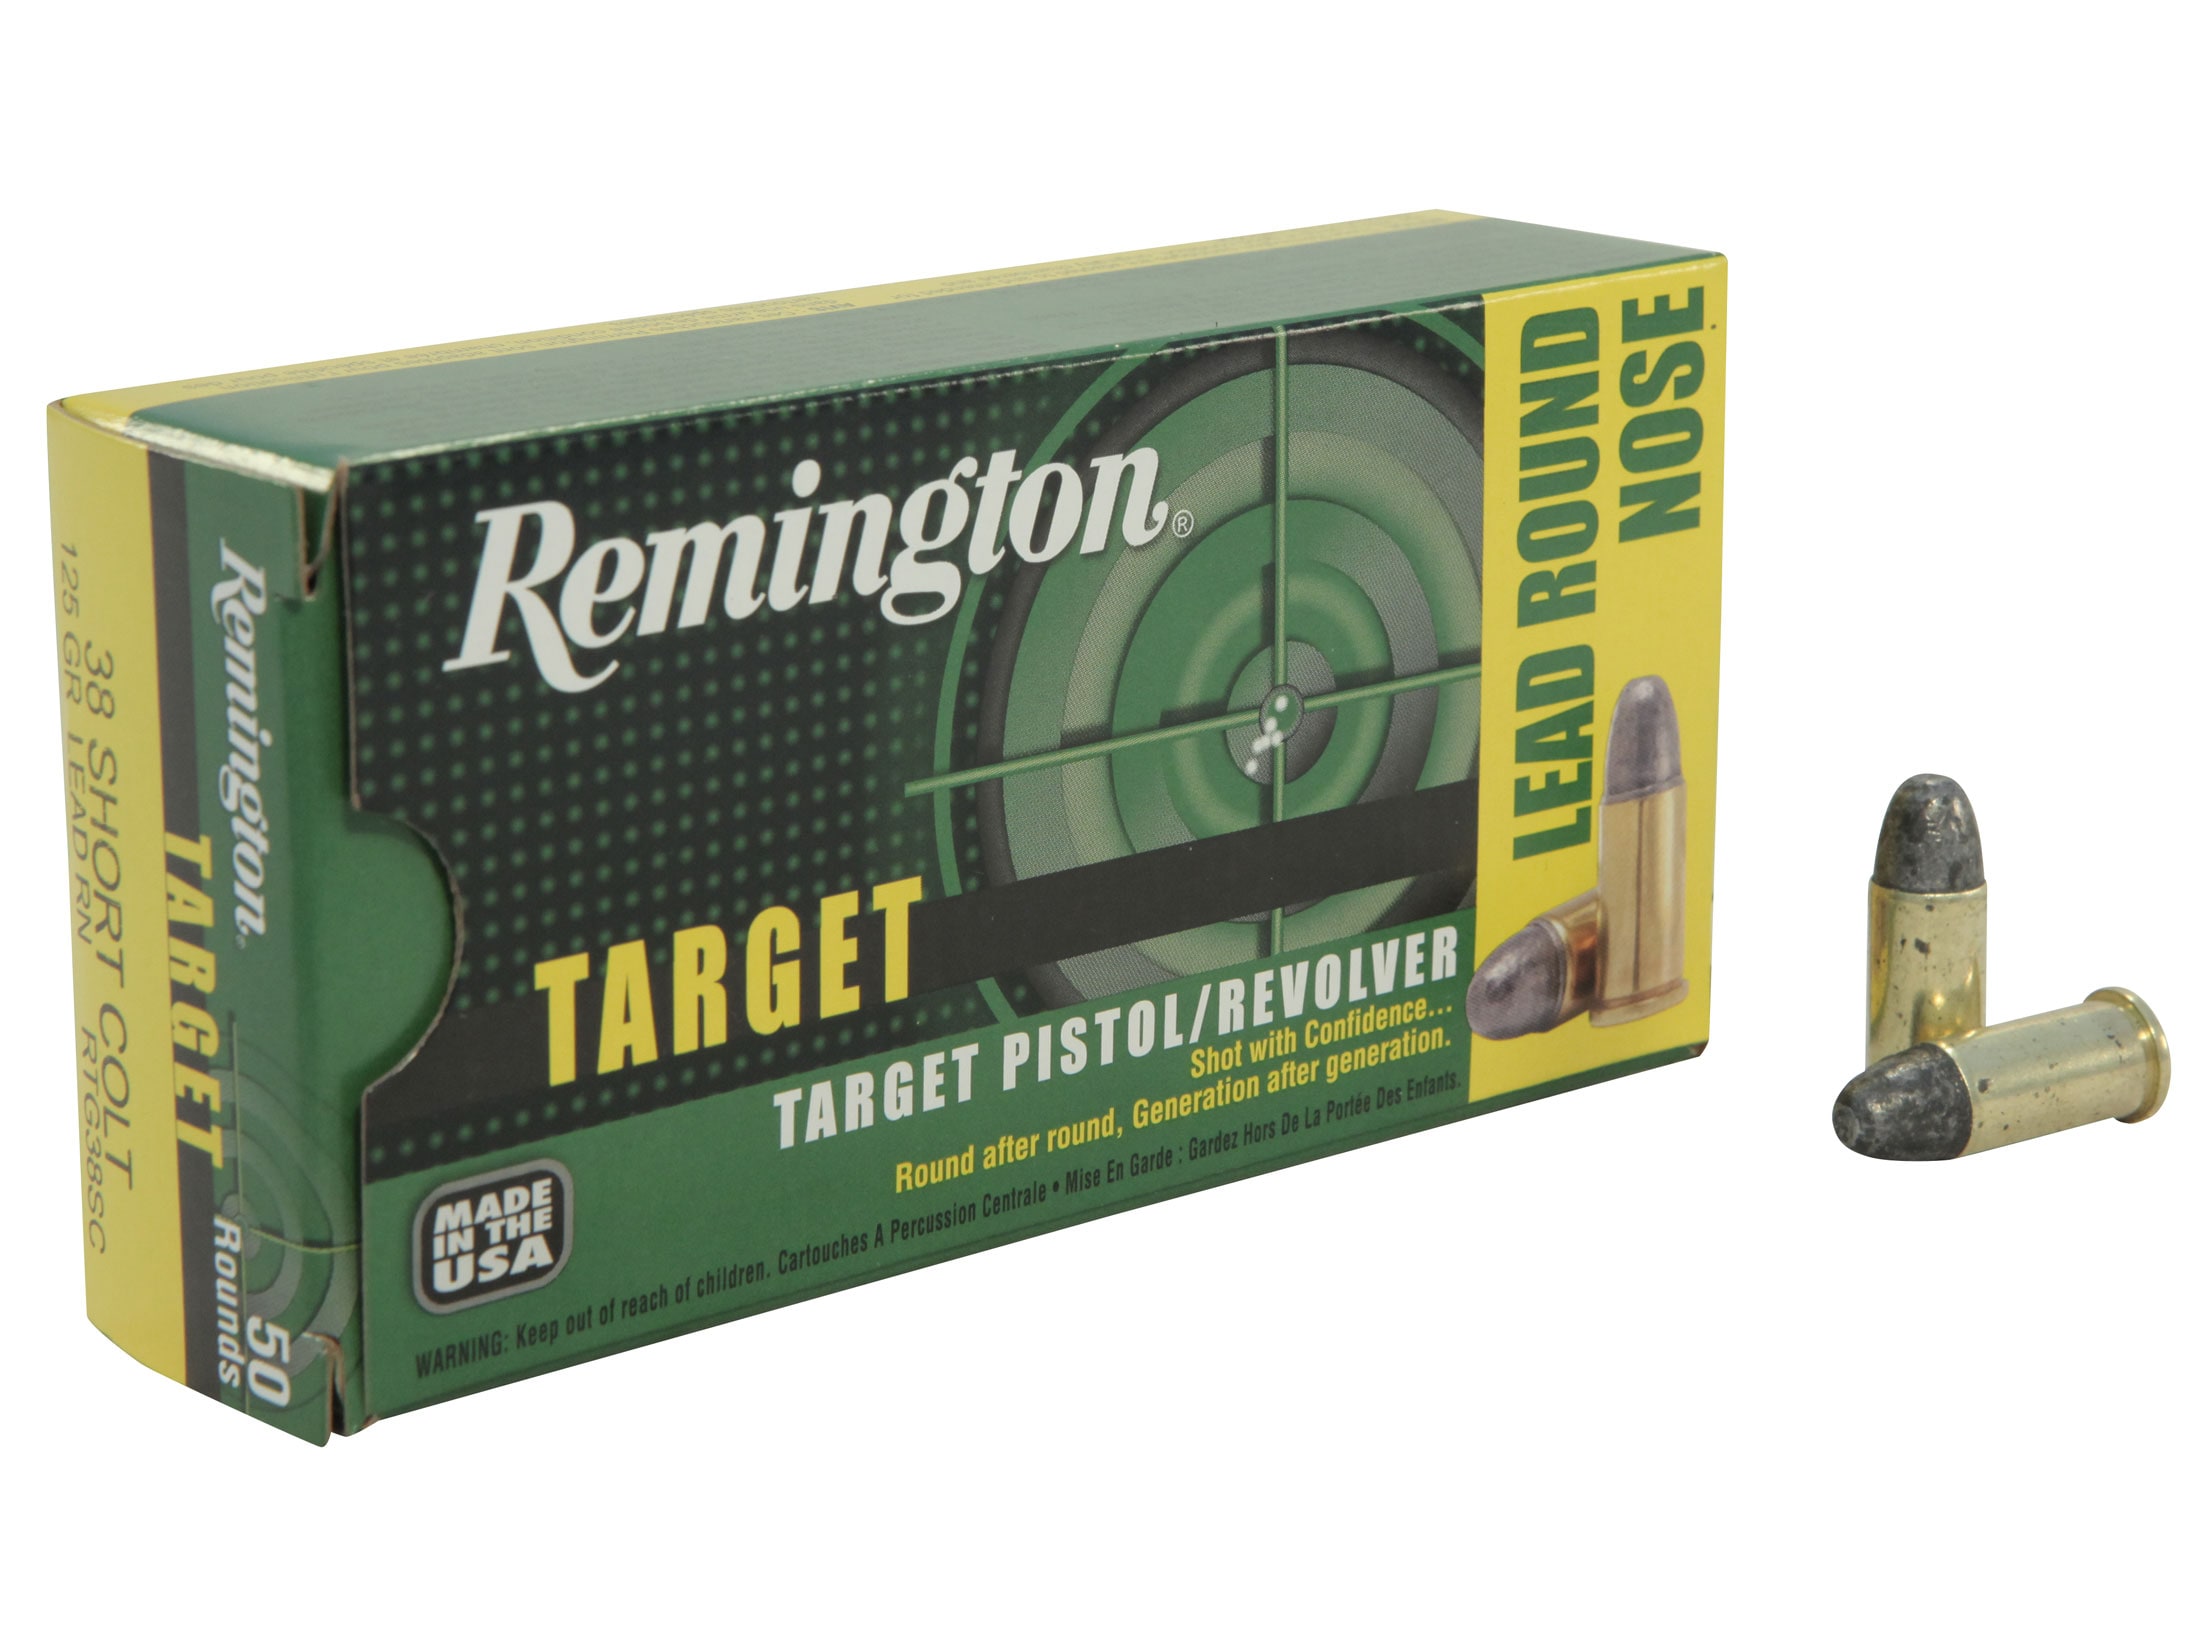 Remington Target 38 Short Colt Ammo 125 Grain Round Nose Box of 50